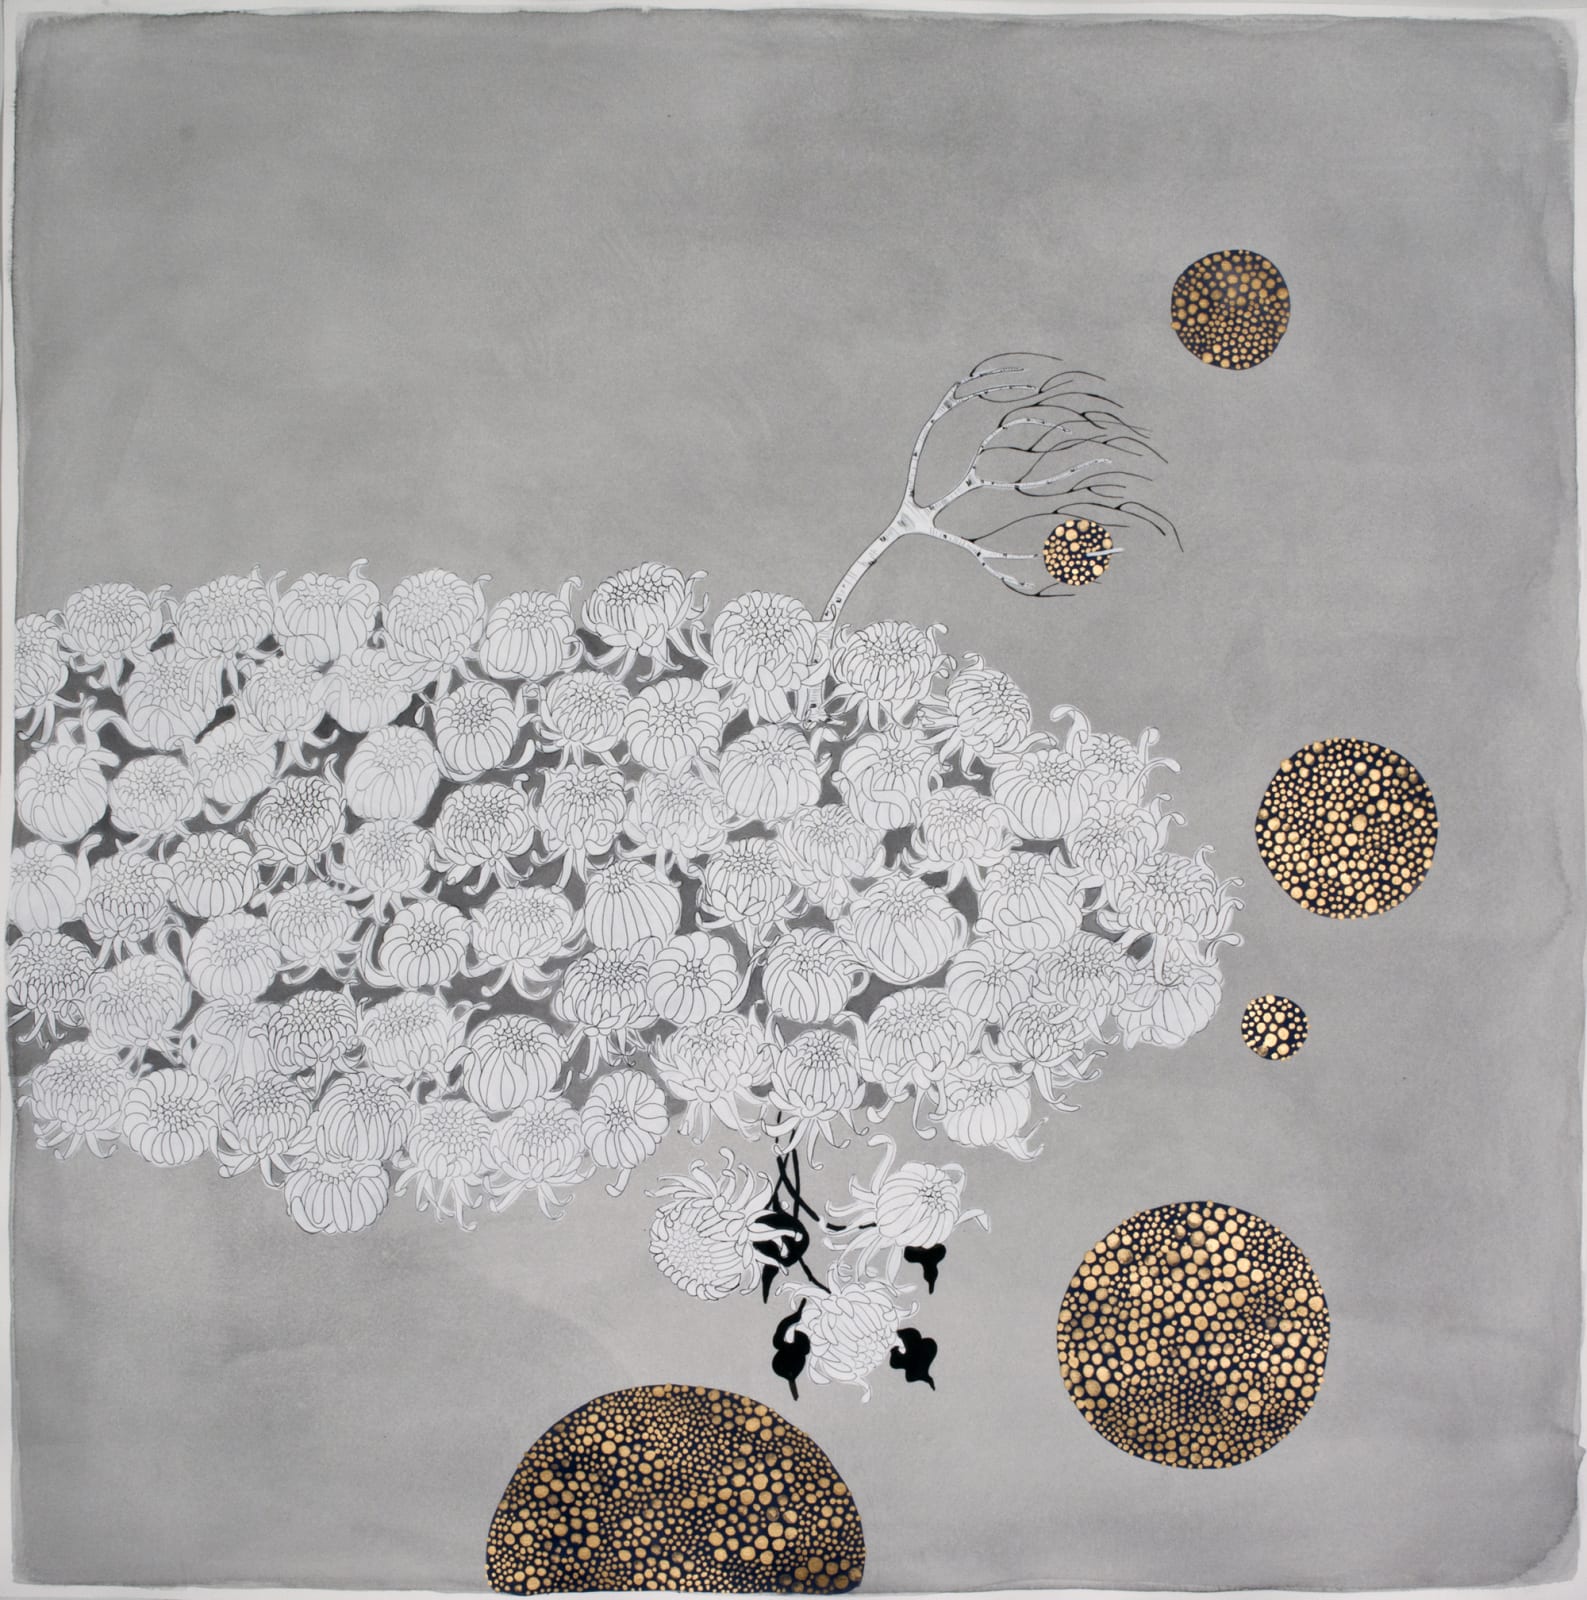 Crystal Liu, the flowers, “orbiting”, 2015